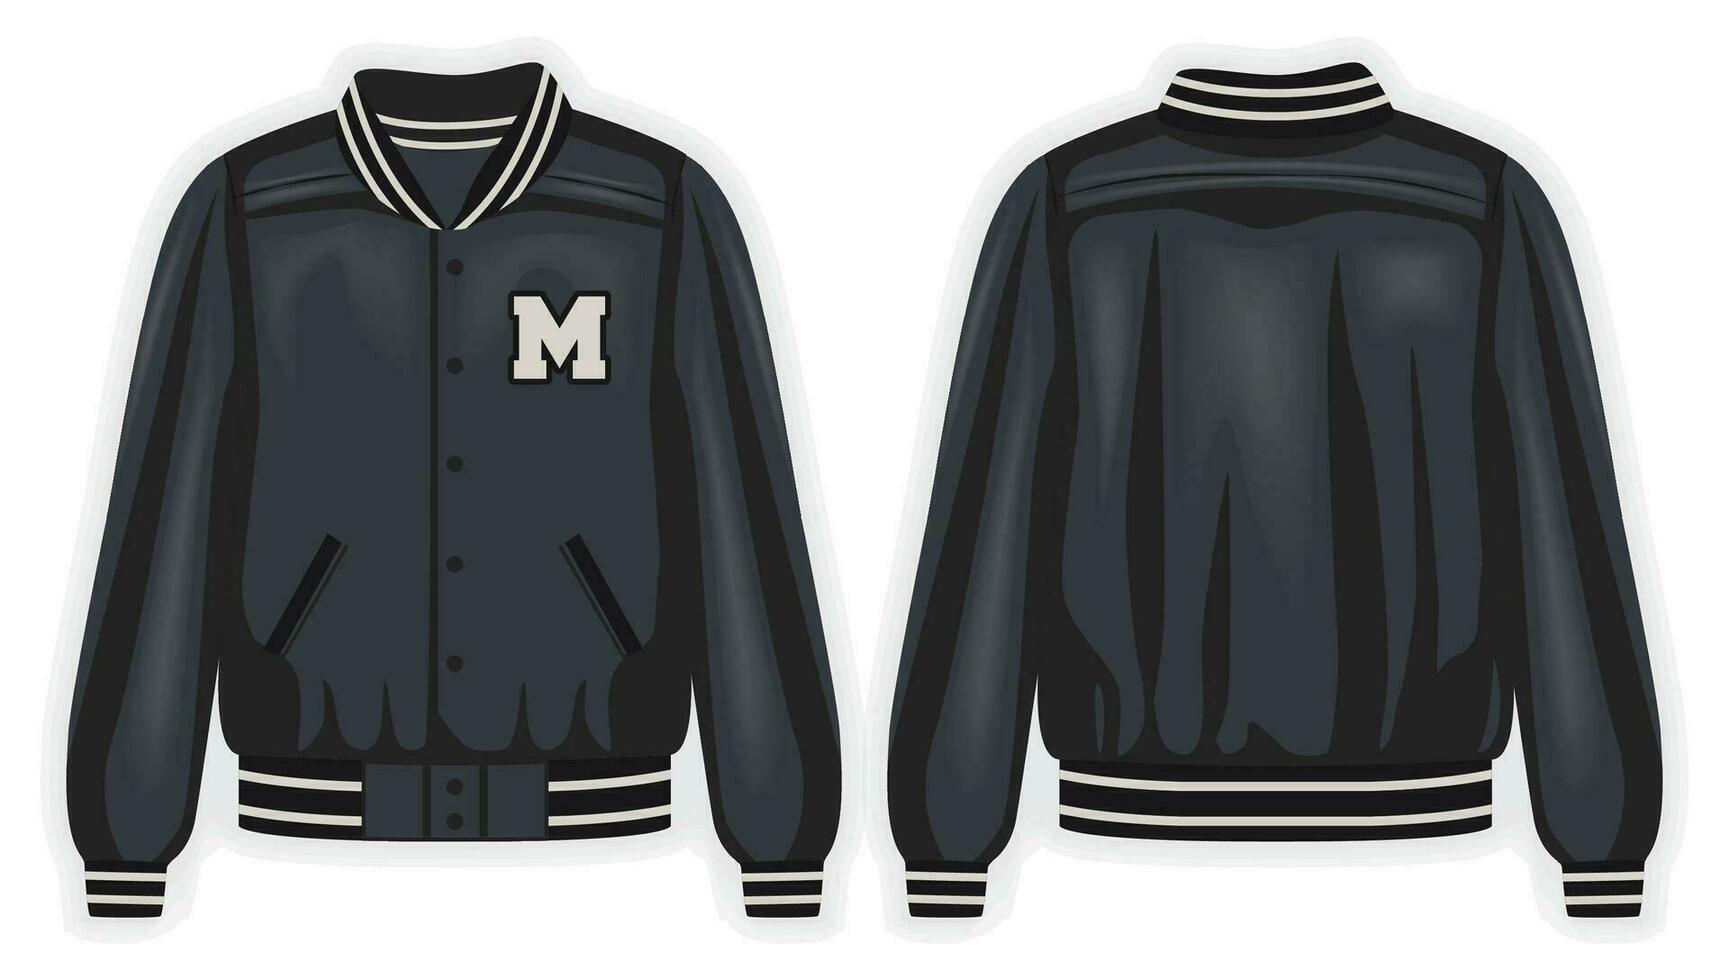 Black varsity jacket front and back view, vector mockup illustration